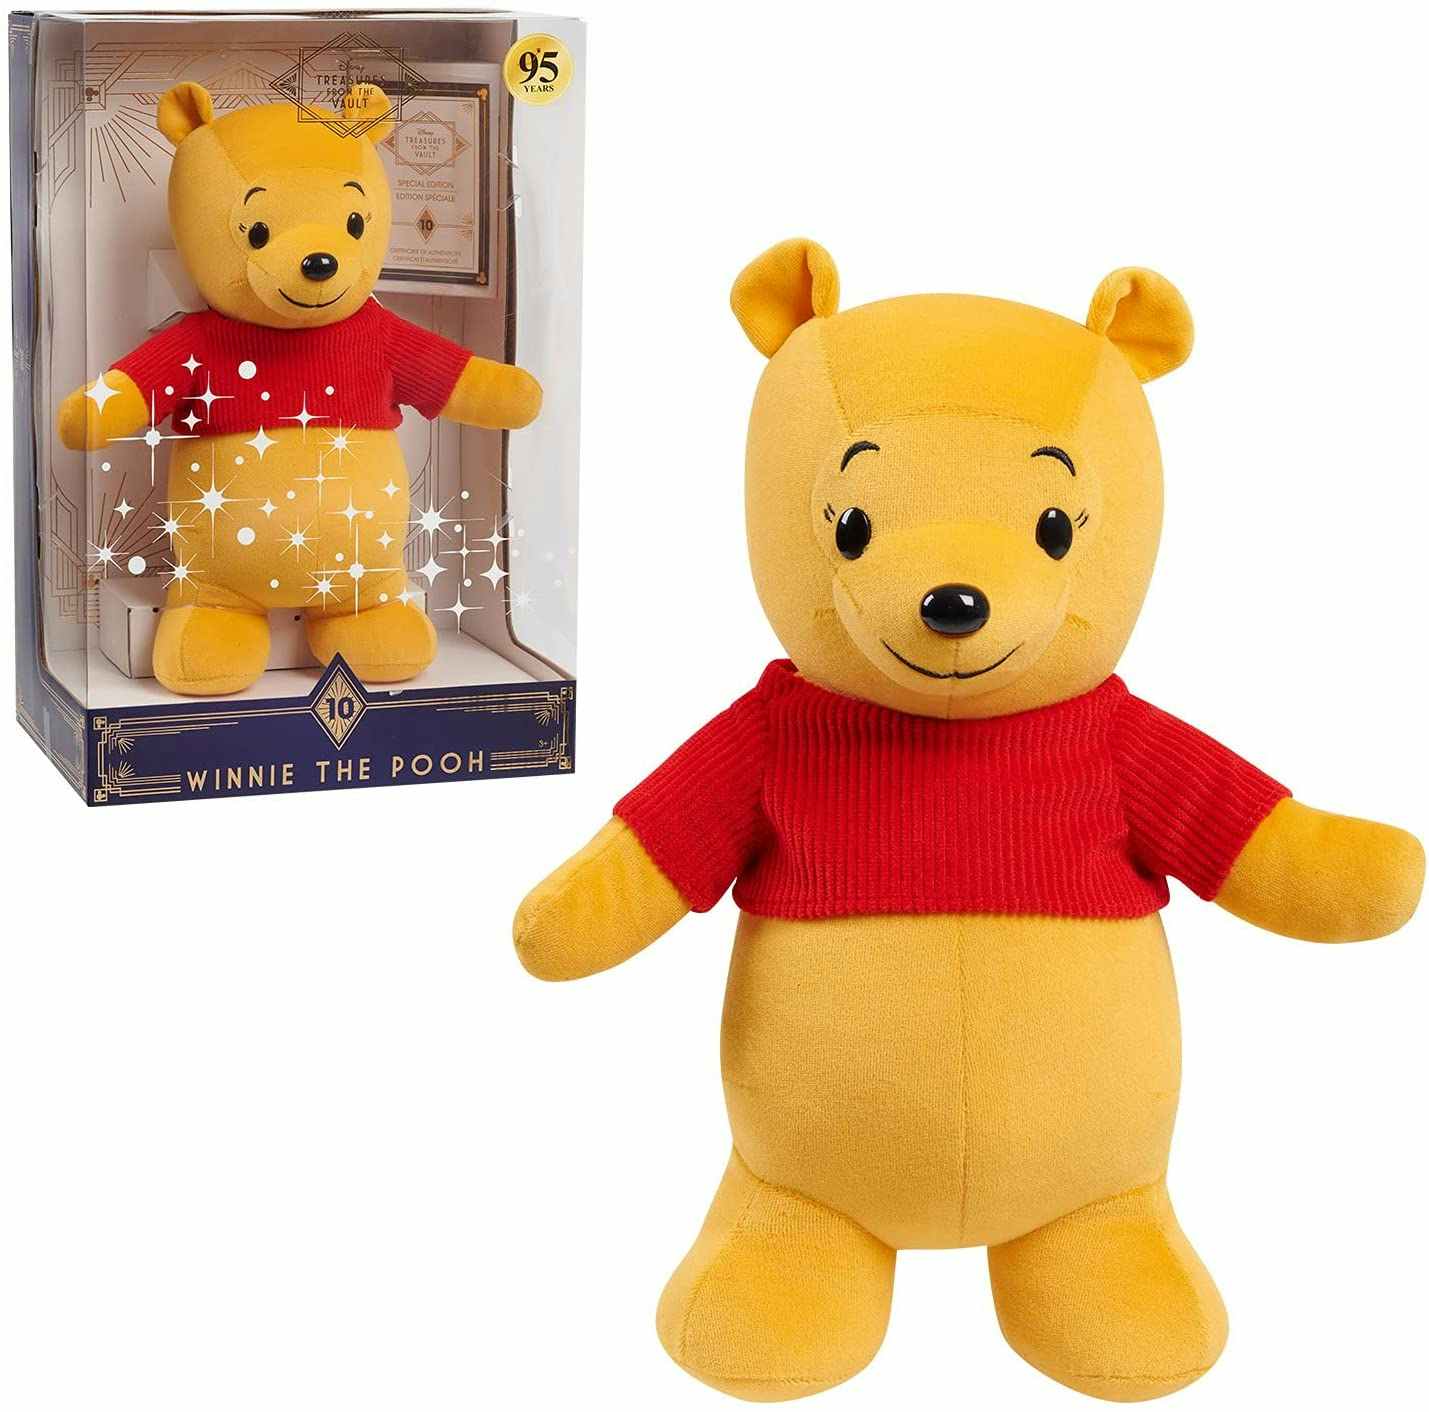 A Winnie the Pooh Disney plush.